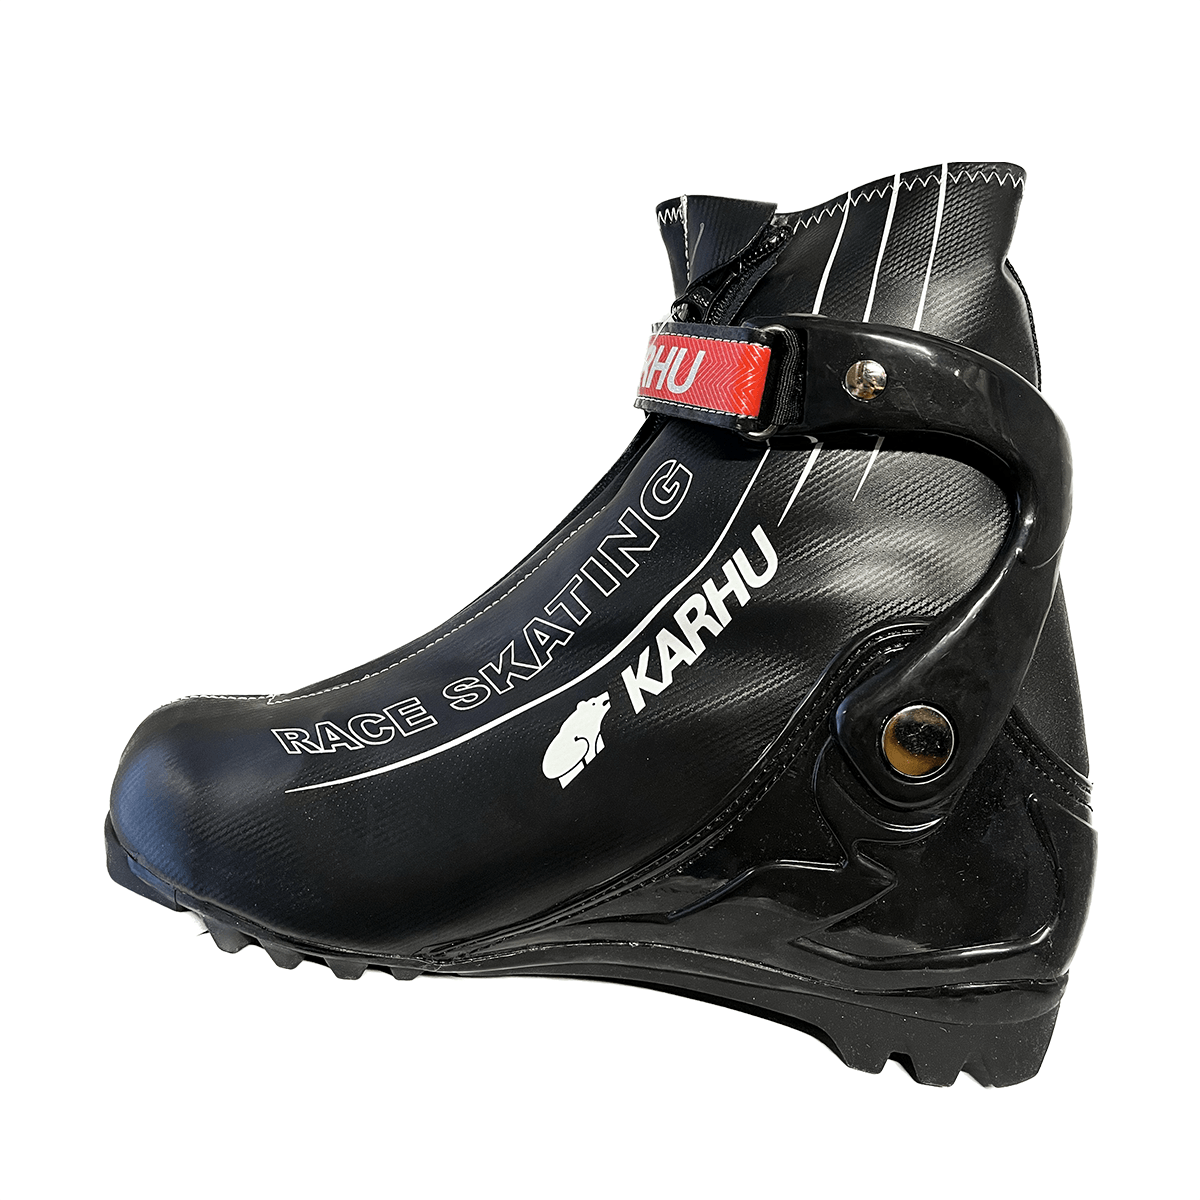 Race Skate Ski Boots - pikkorisport